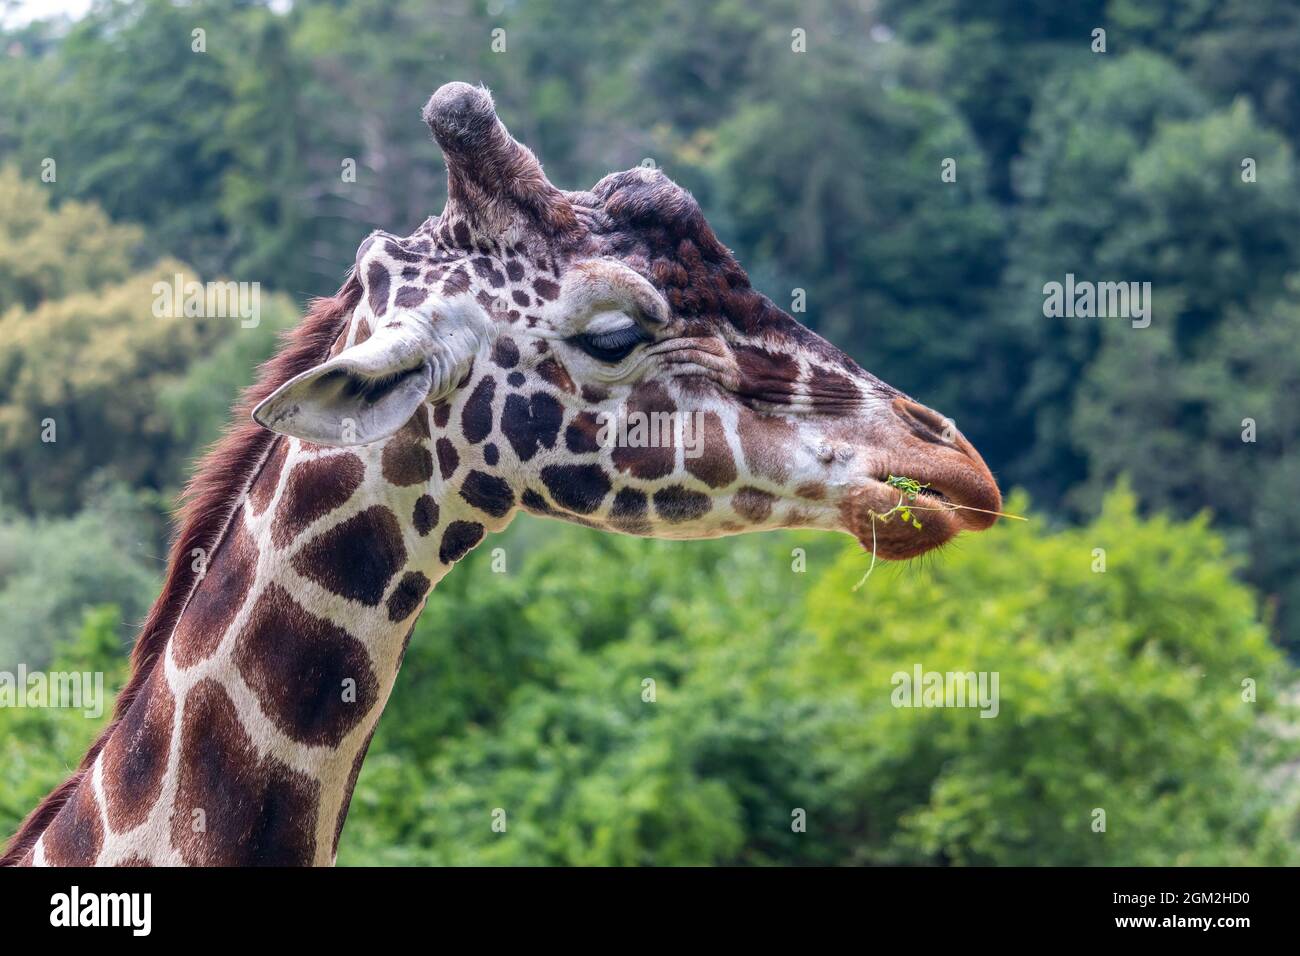 giraffe eating grass - giraffe head, green trees in the background Stock Photo